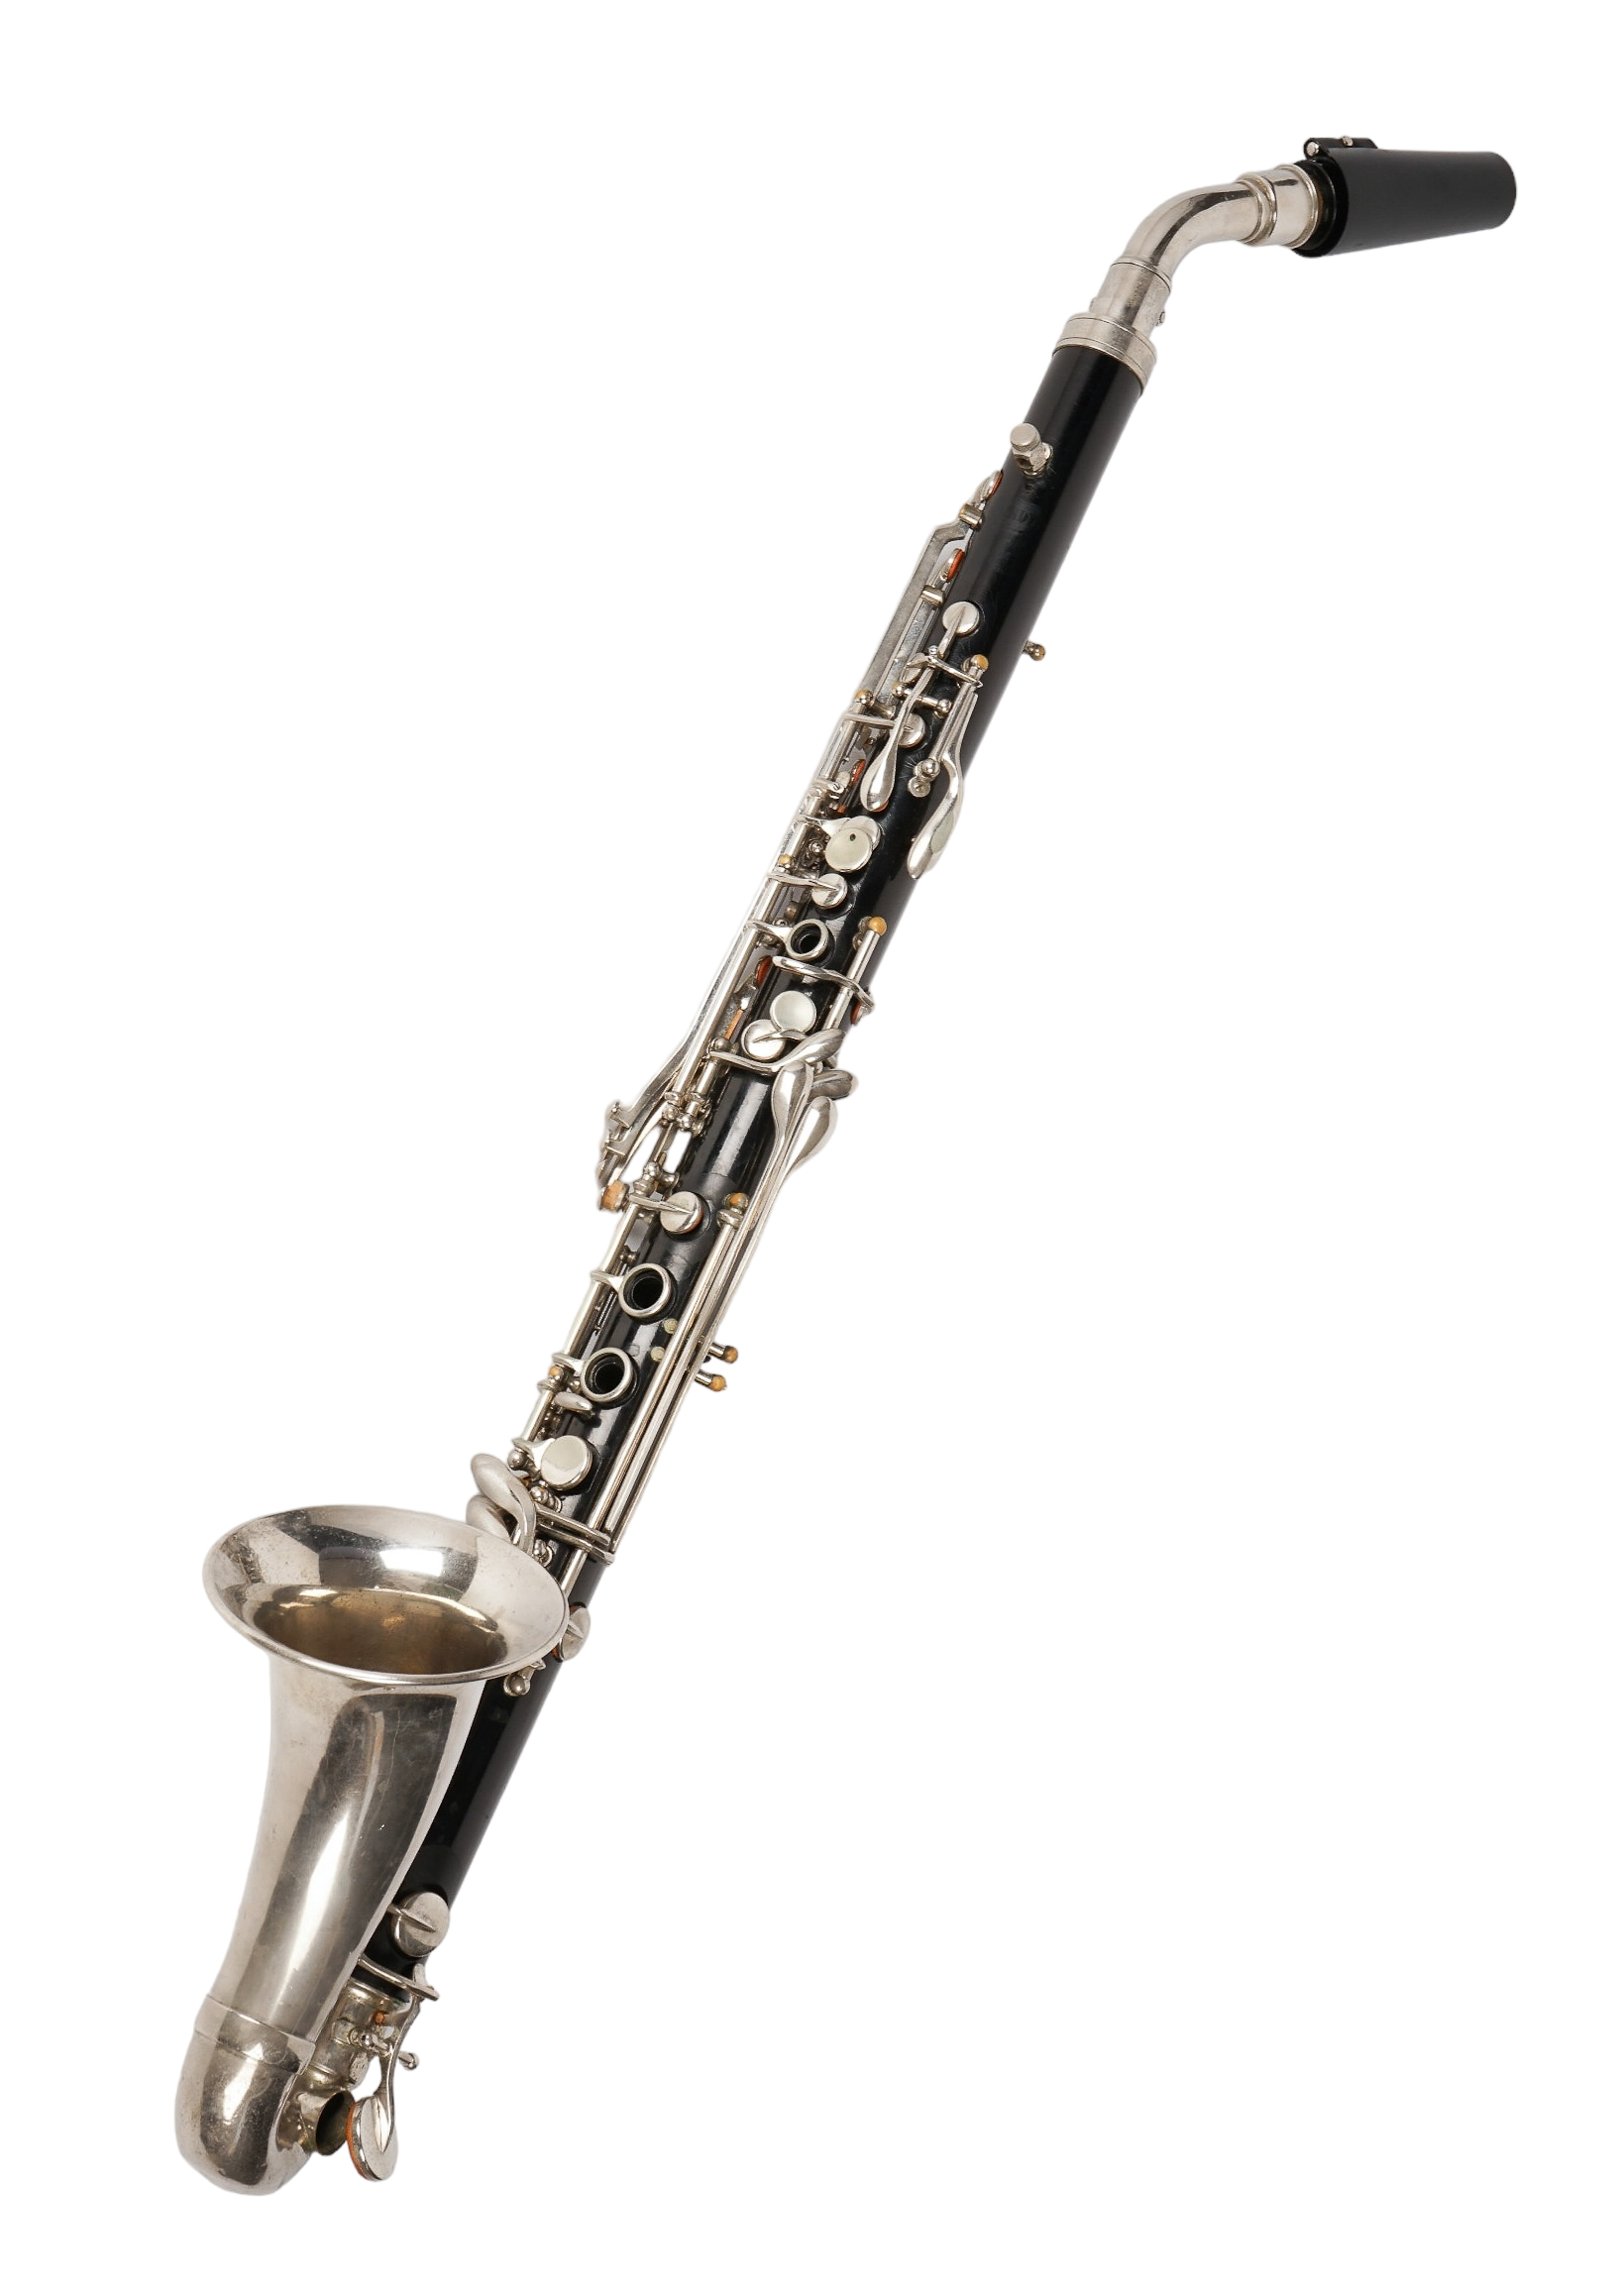 Selmer alto clarinet, serial #1848.